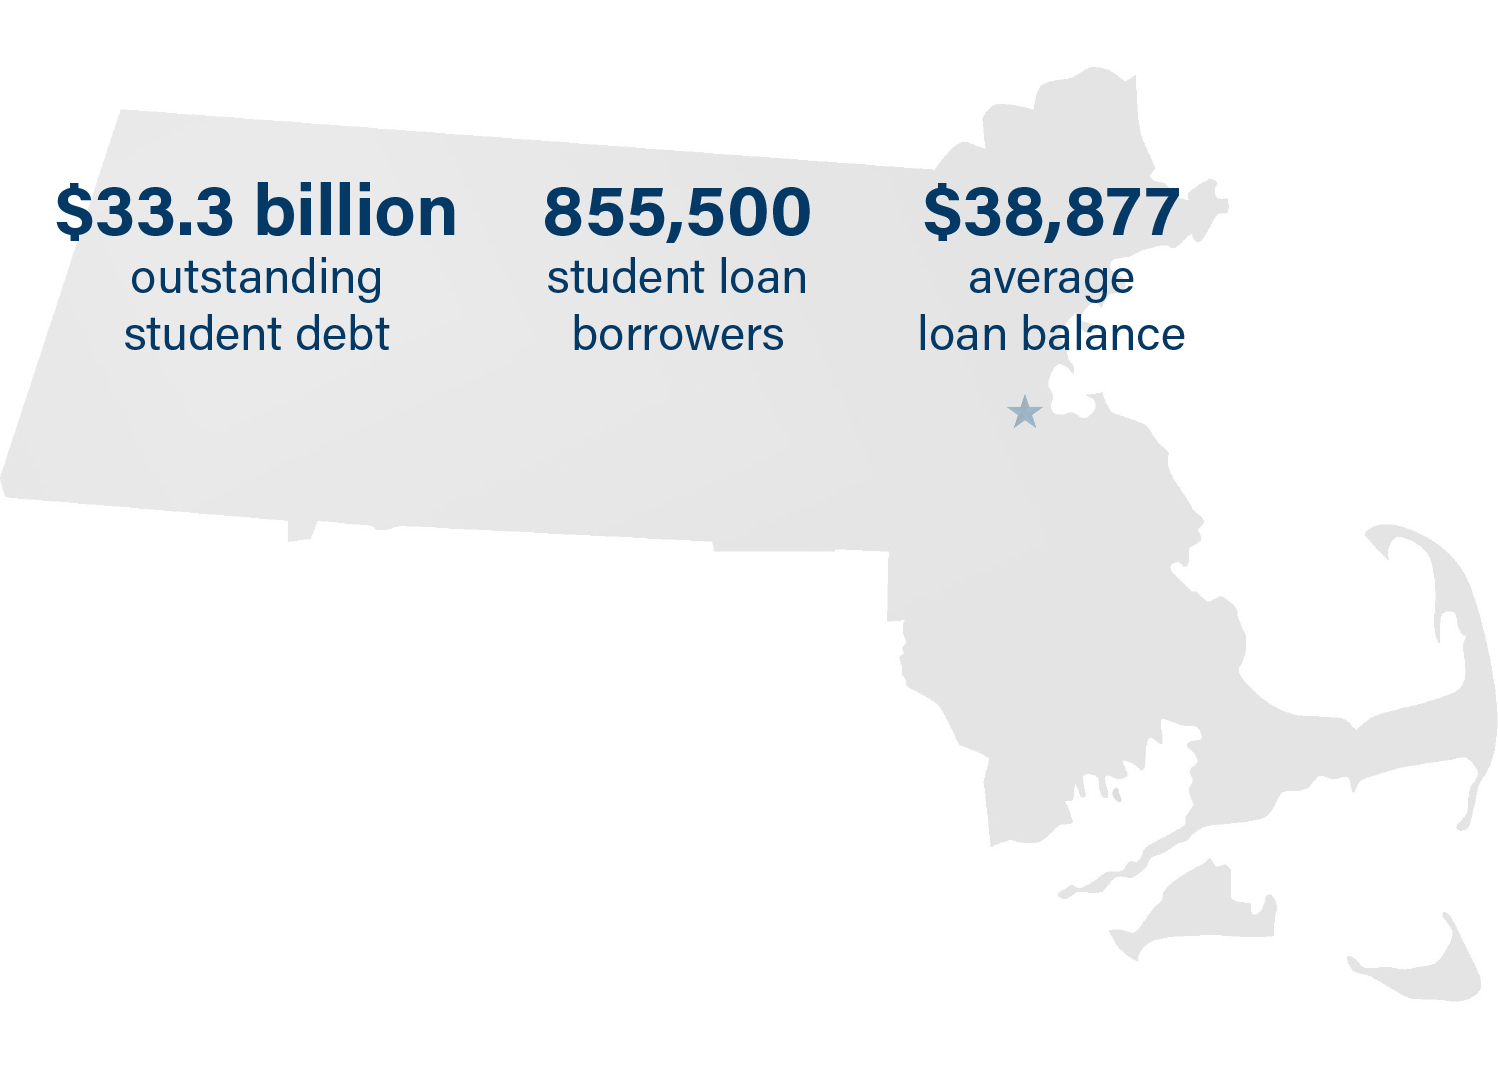 Massachusetts student debt:
33.3 billion dollars in outstanding student debt
855,500 student loan borrowers
38,877 dollars in average loan balance